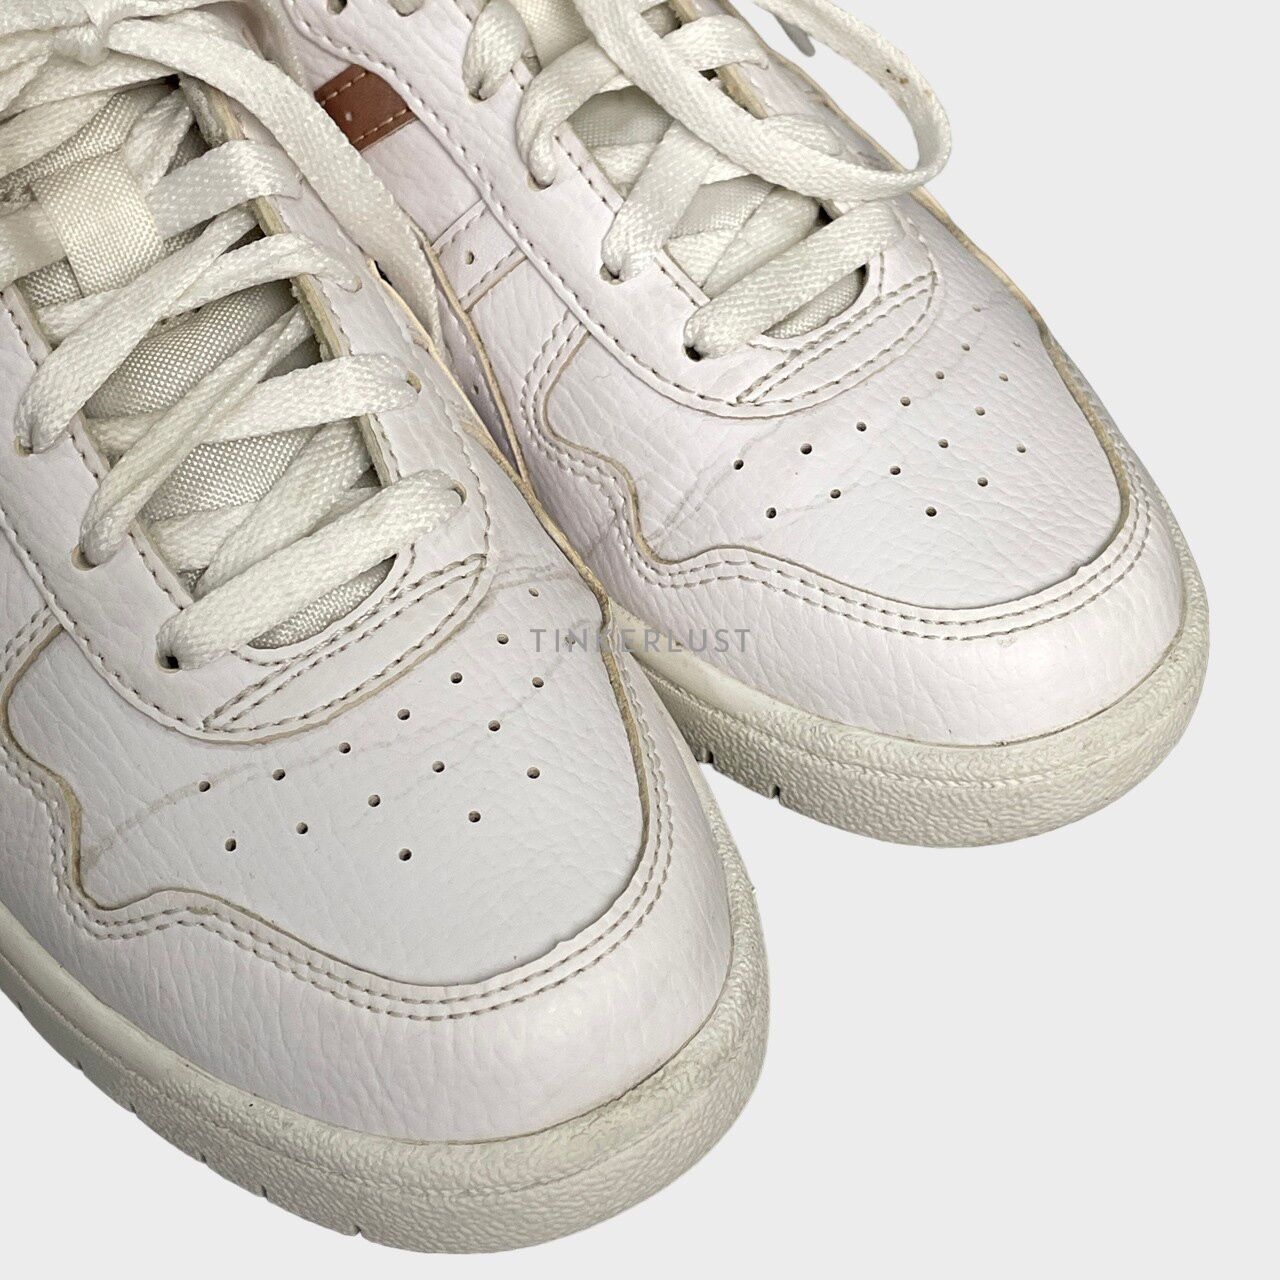 Asics White Sneakers